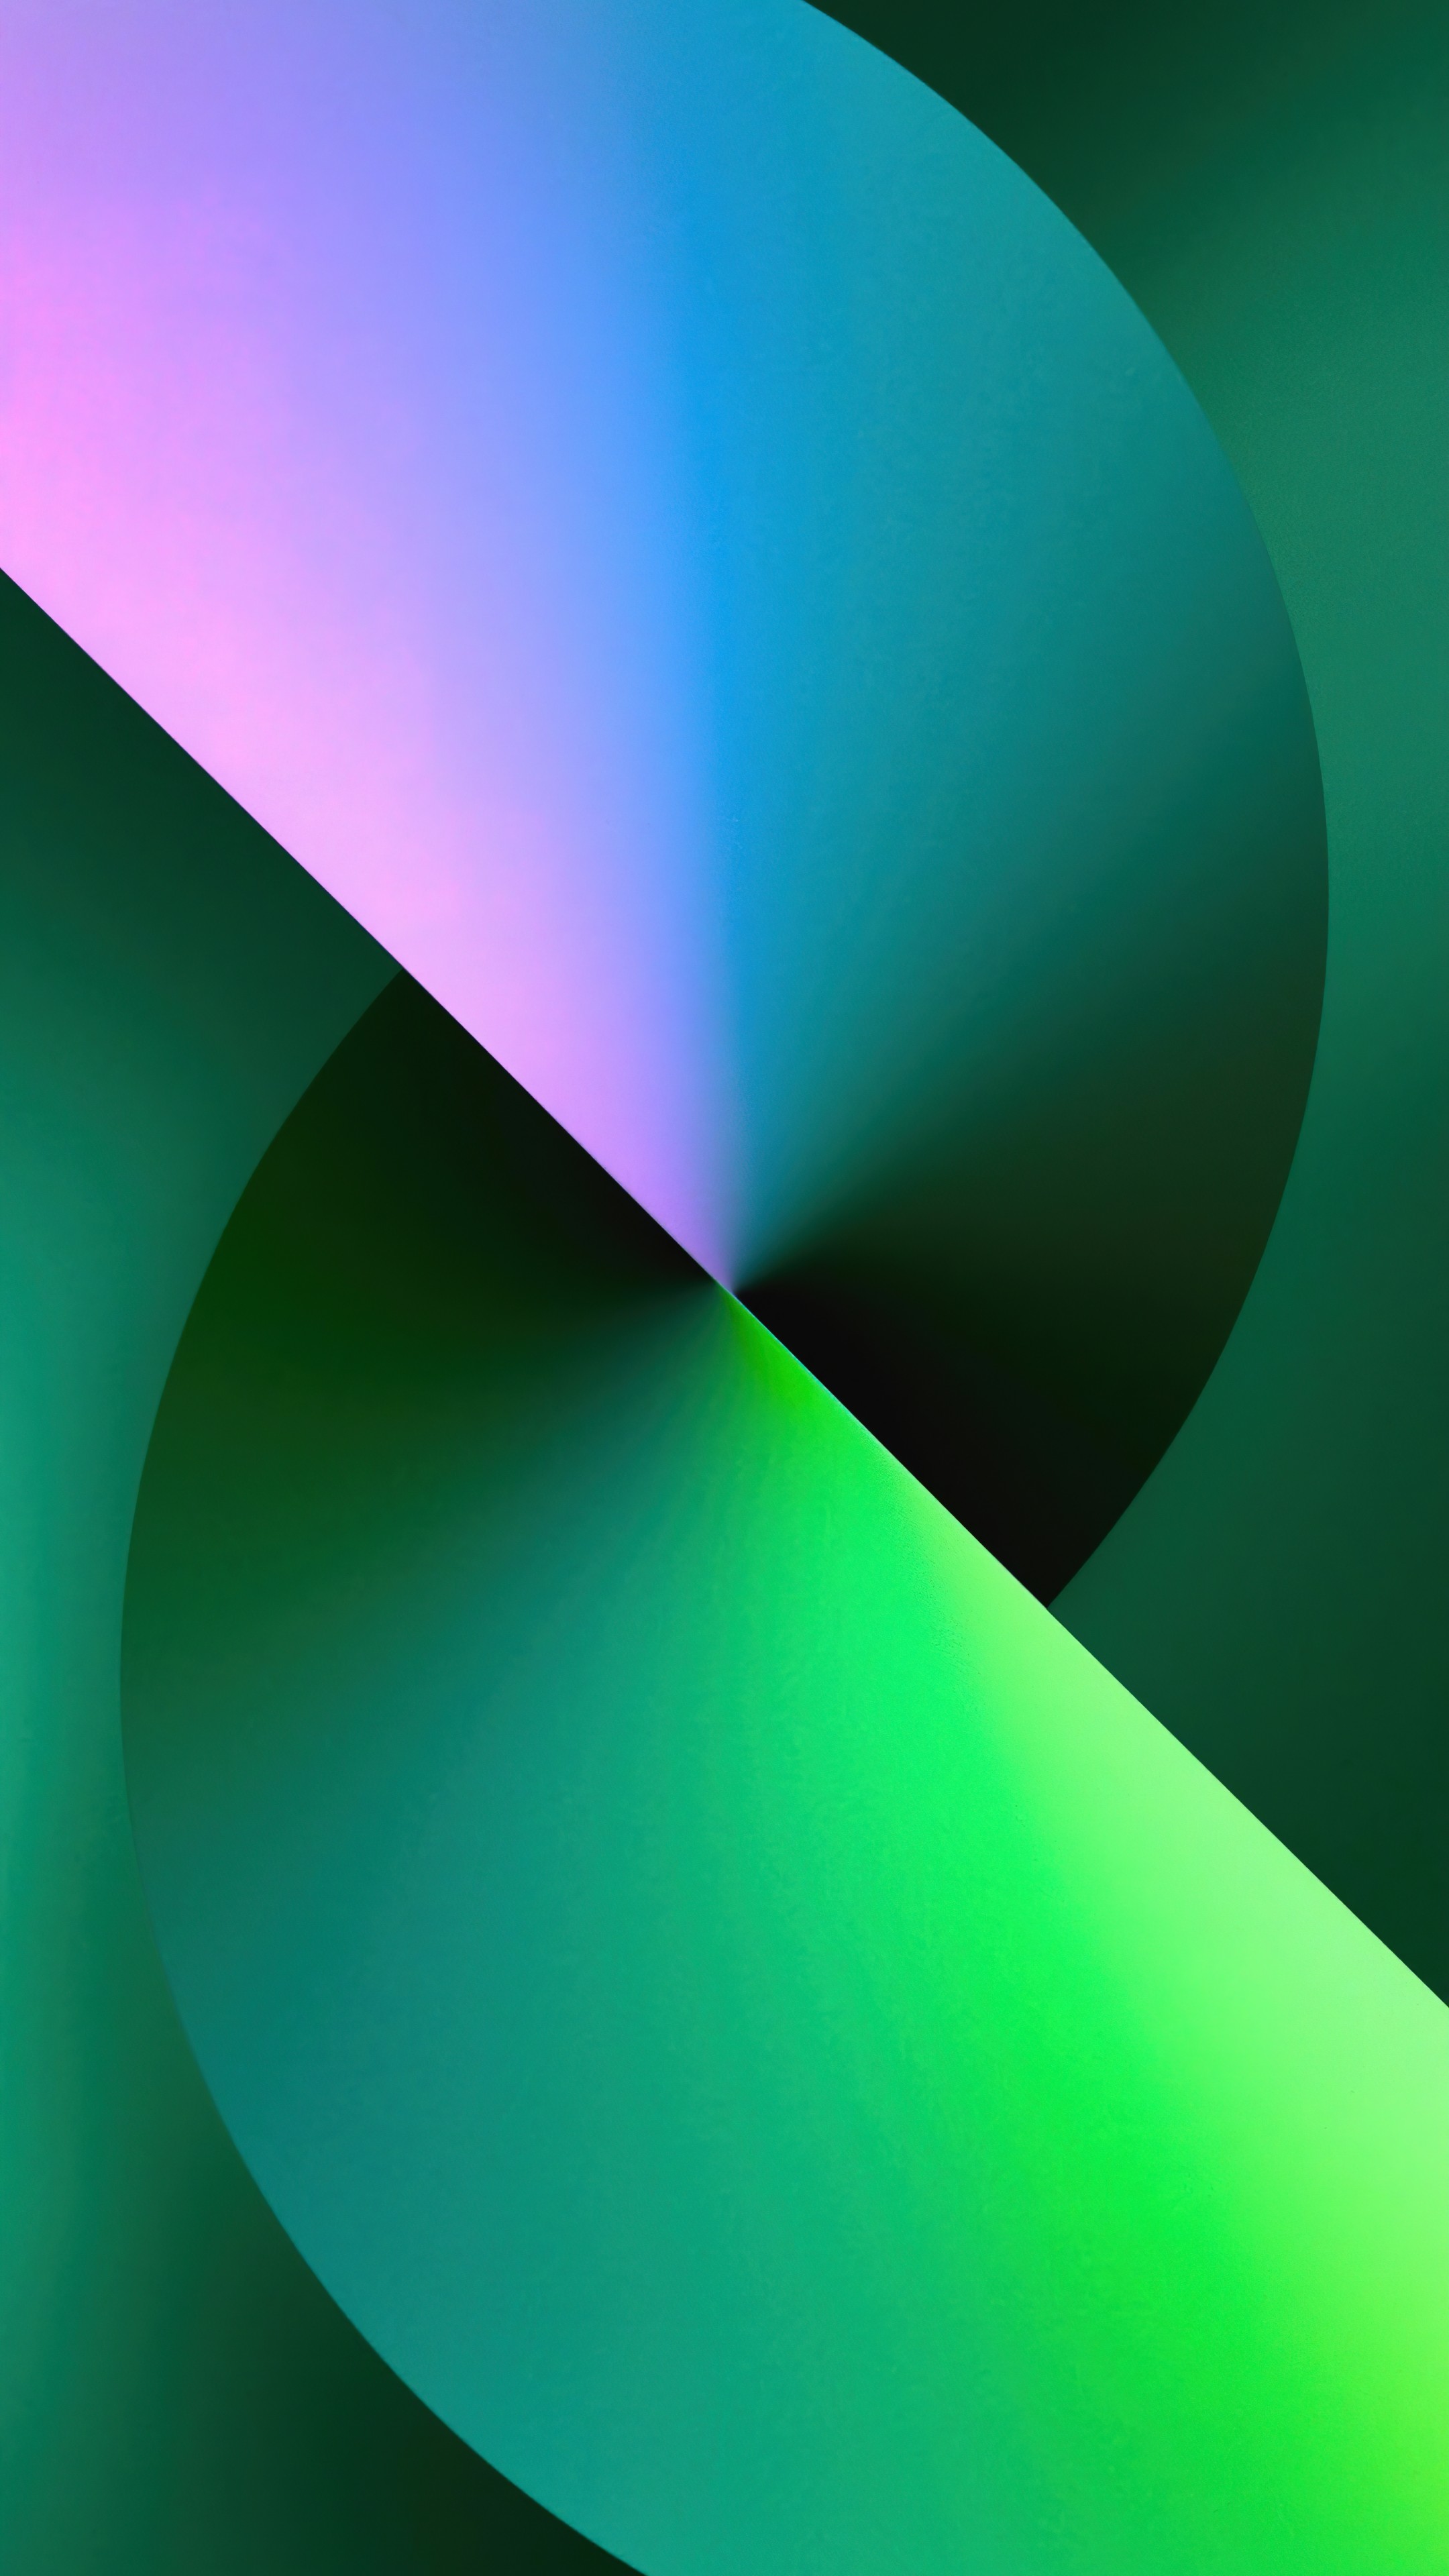 Wallpaper iPhone Alpine Green, twist, abstract, iOS 5K, OS